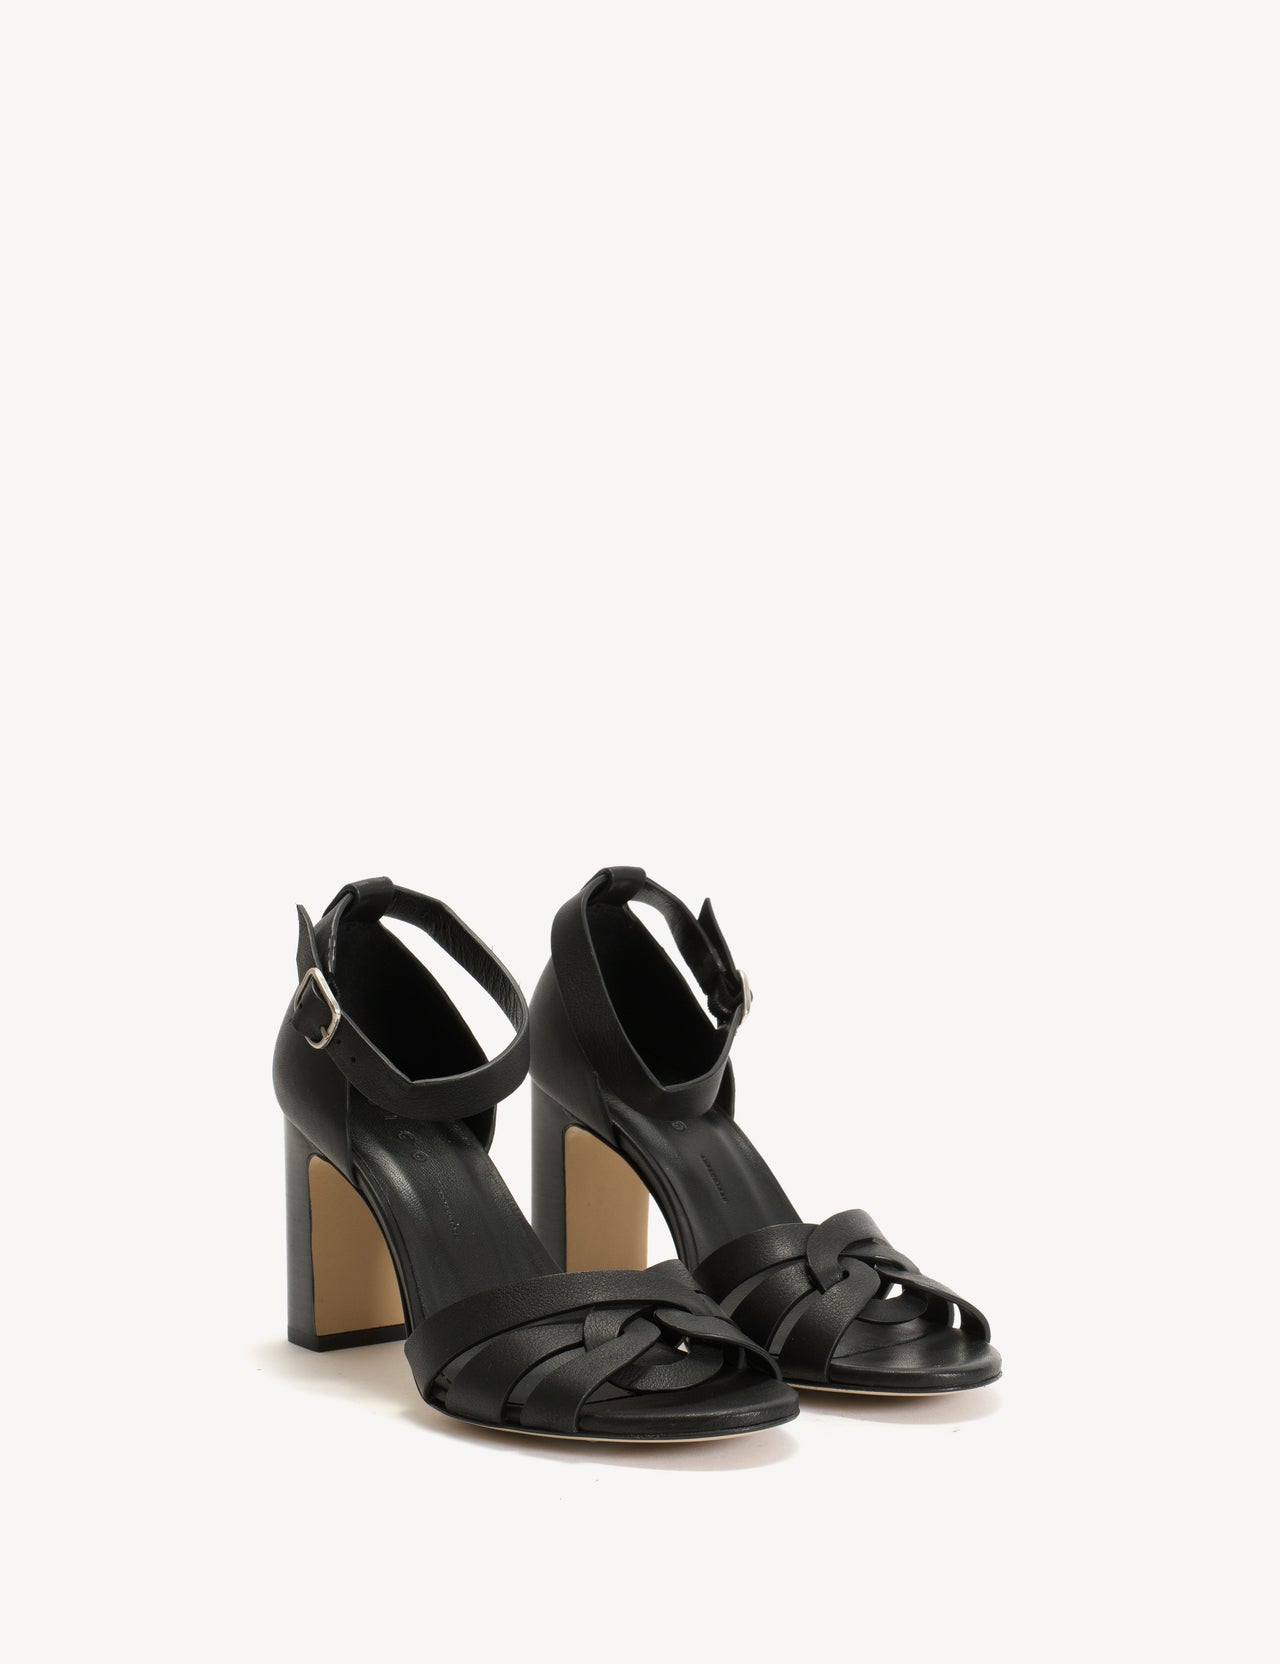 Sasha Sandal In Black Calfskin with 75mm Heel